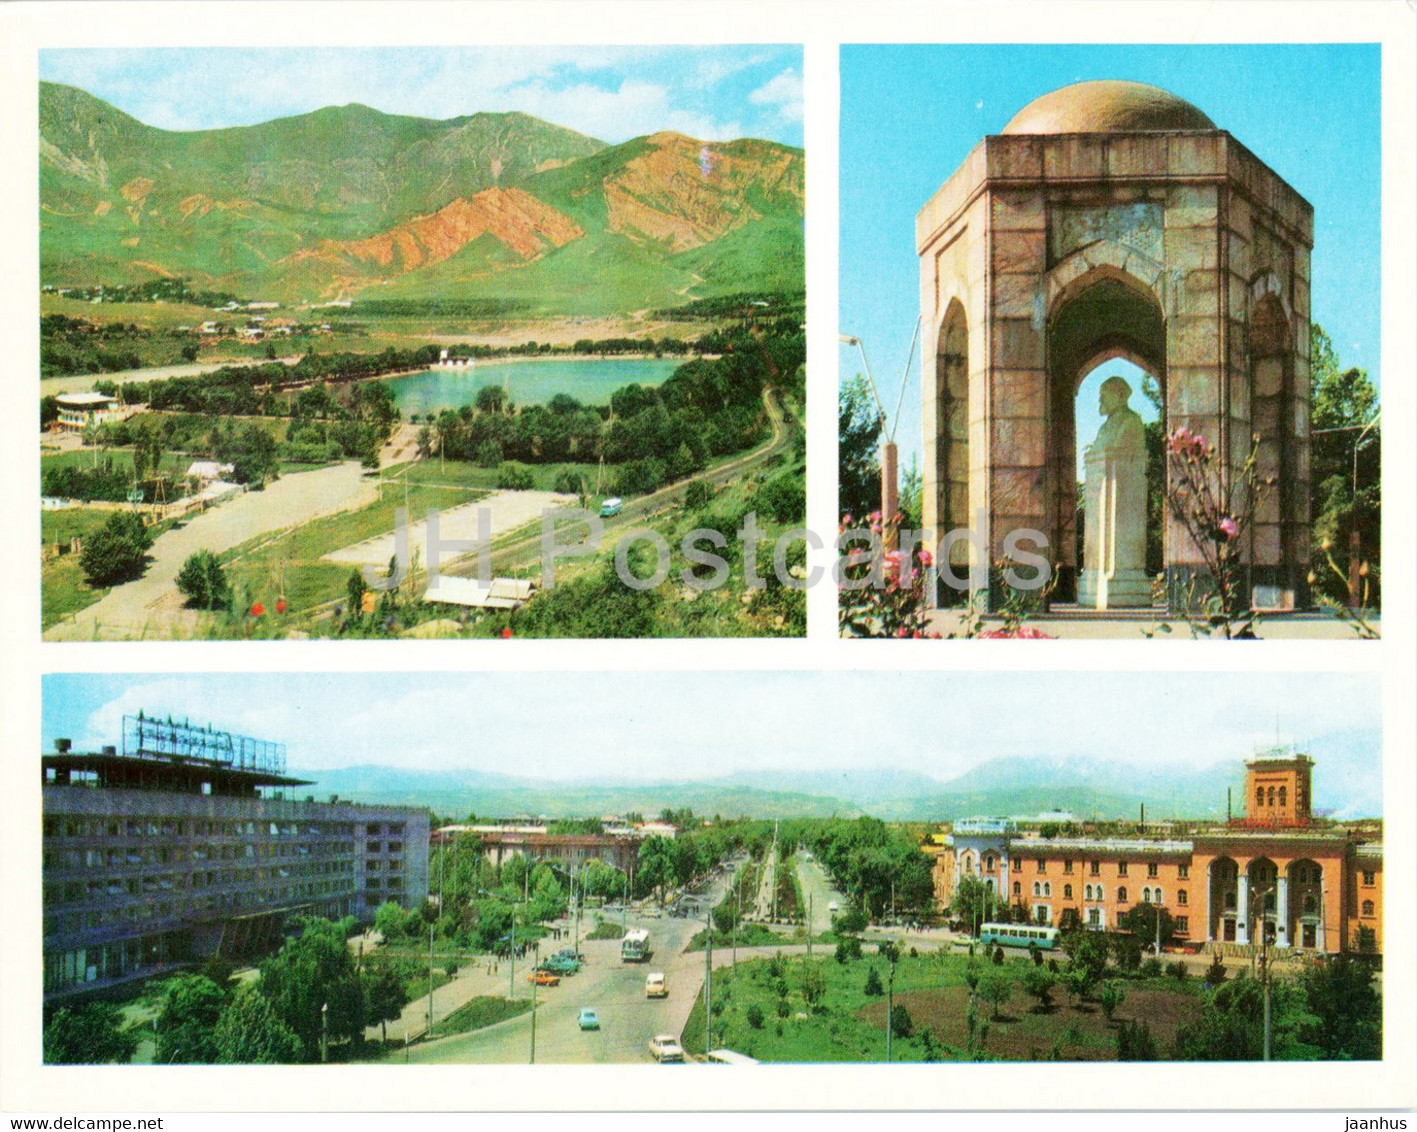 Dushanbe - Lake Varzob - Sadriddin Aini Mausoleum And Square - 1974 - Tajikistan USSR - Unused - Tadjikistan